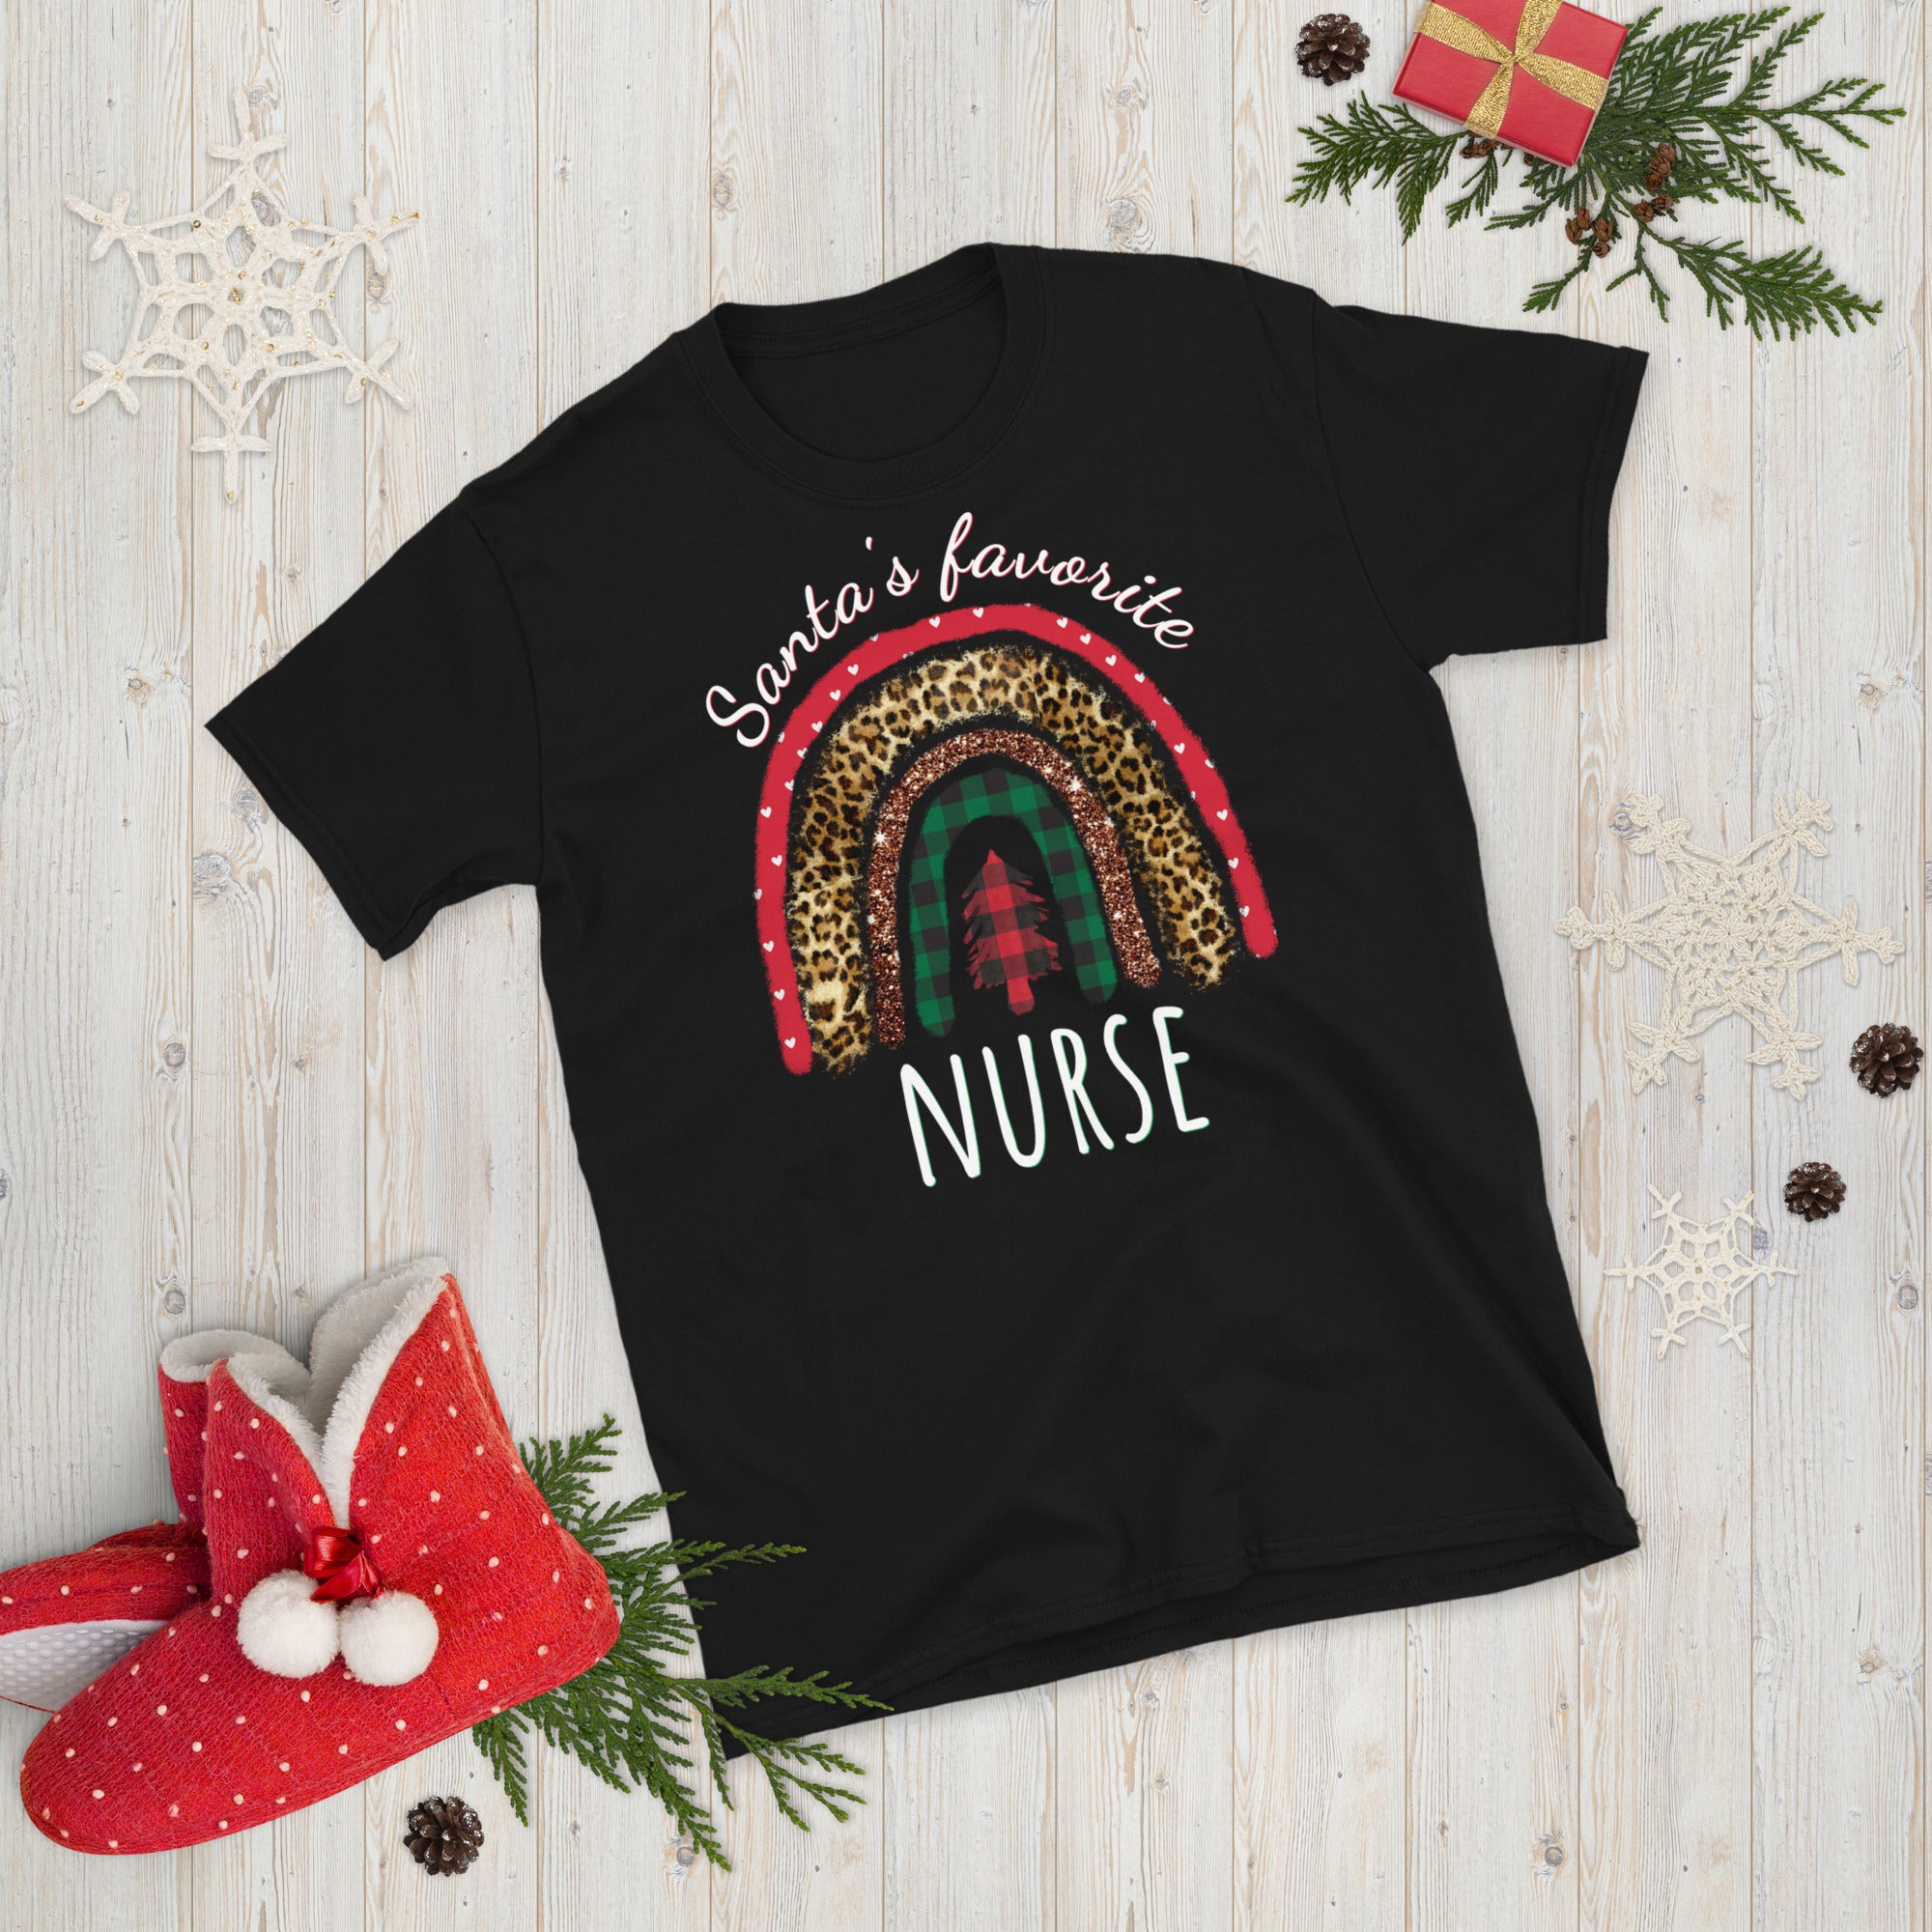 Santa&#39;s Favorite Nurse Shirt, Christmas Nursing Shirt, Nursing School T Shirt, Nursing School Tee, Nurse Shirt, Funny Nursing Shirt, Xmas